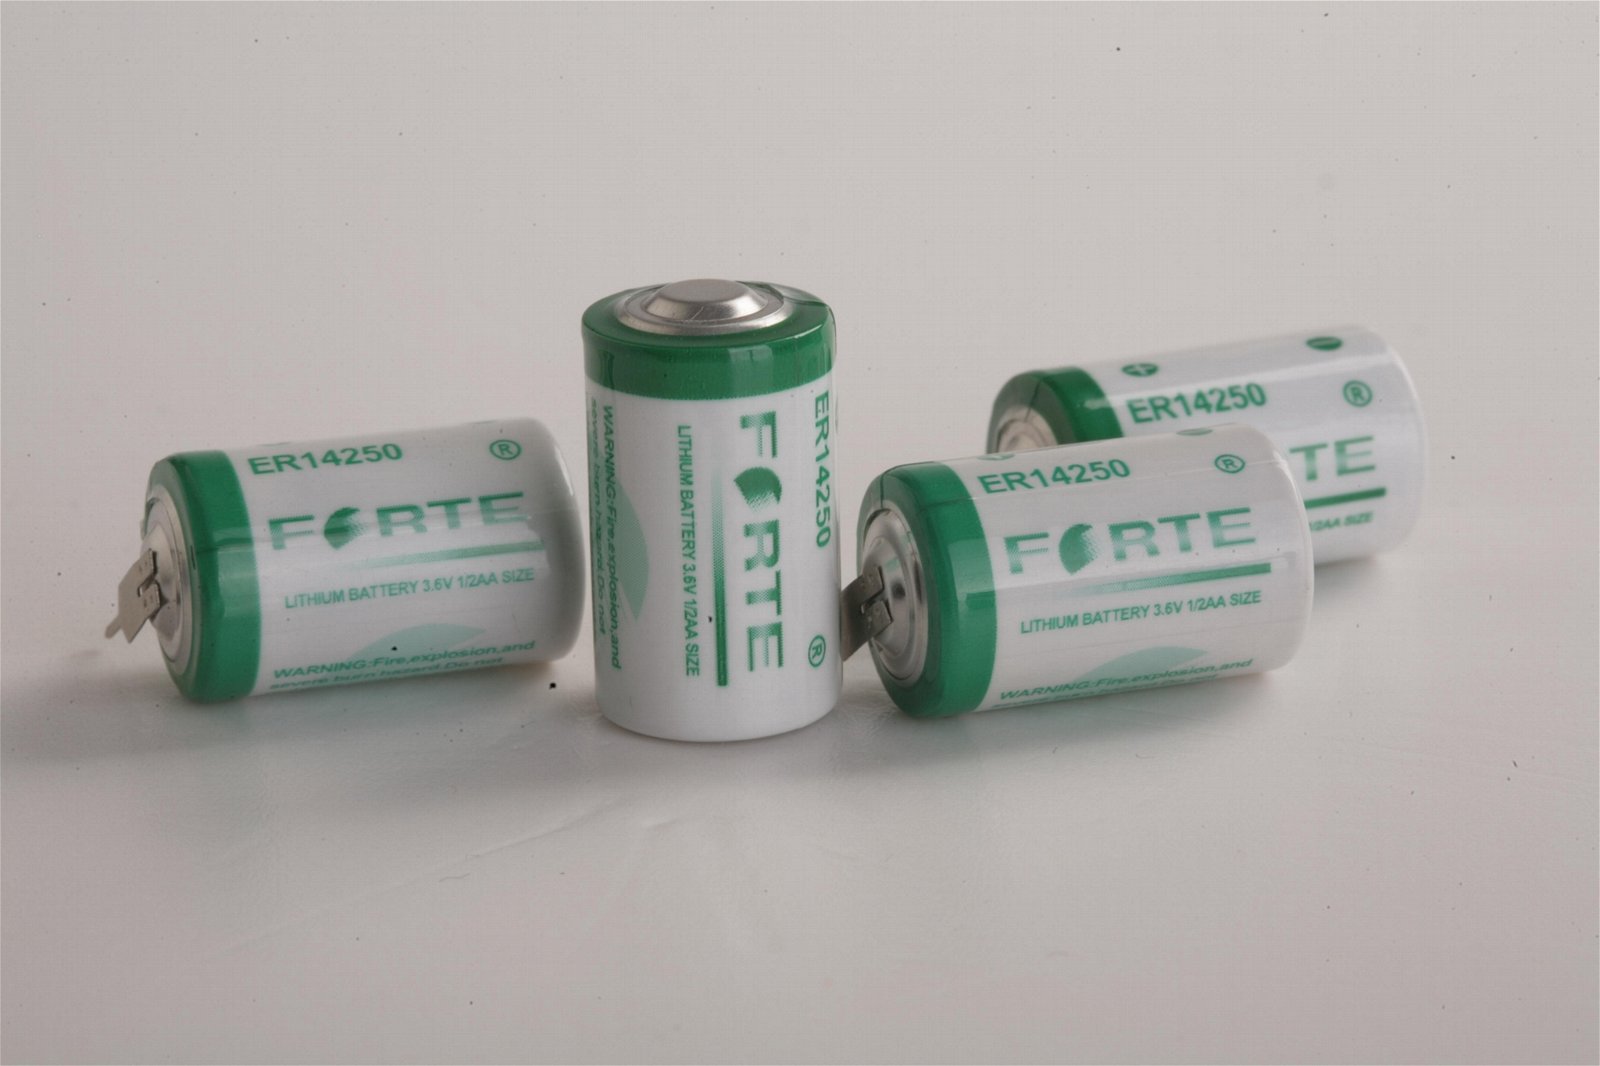 ER14250 一次锂电池3.6V 1/2AA size  rfid电子标签 5